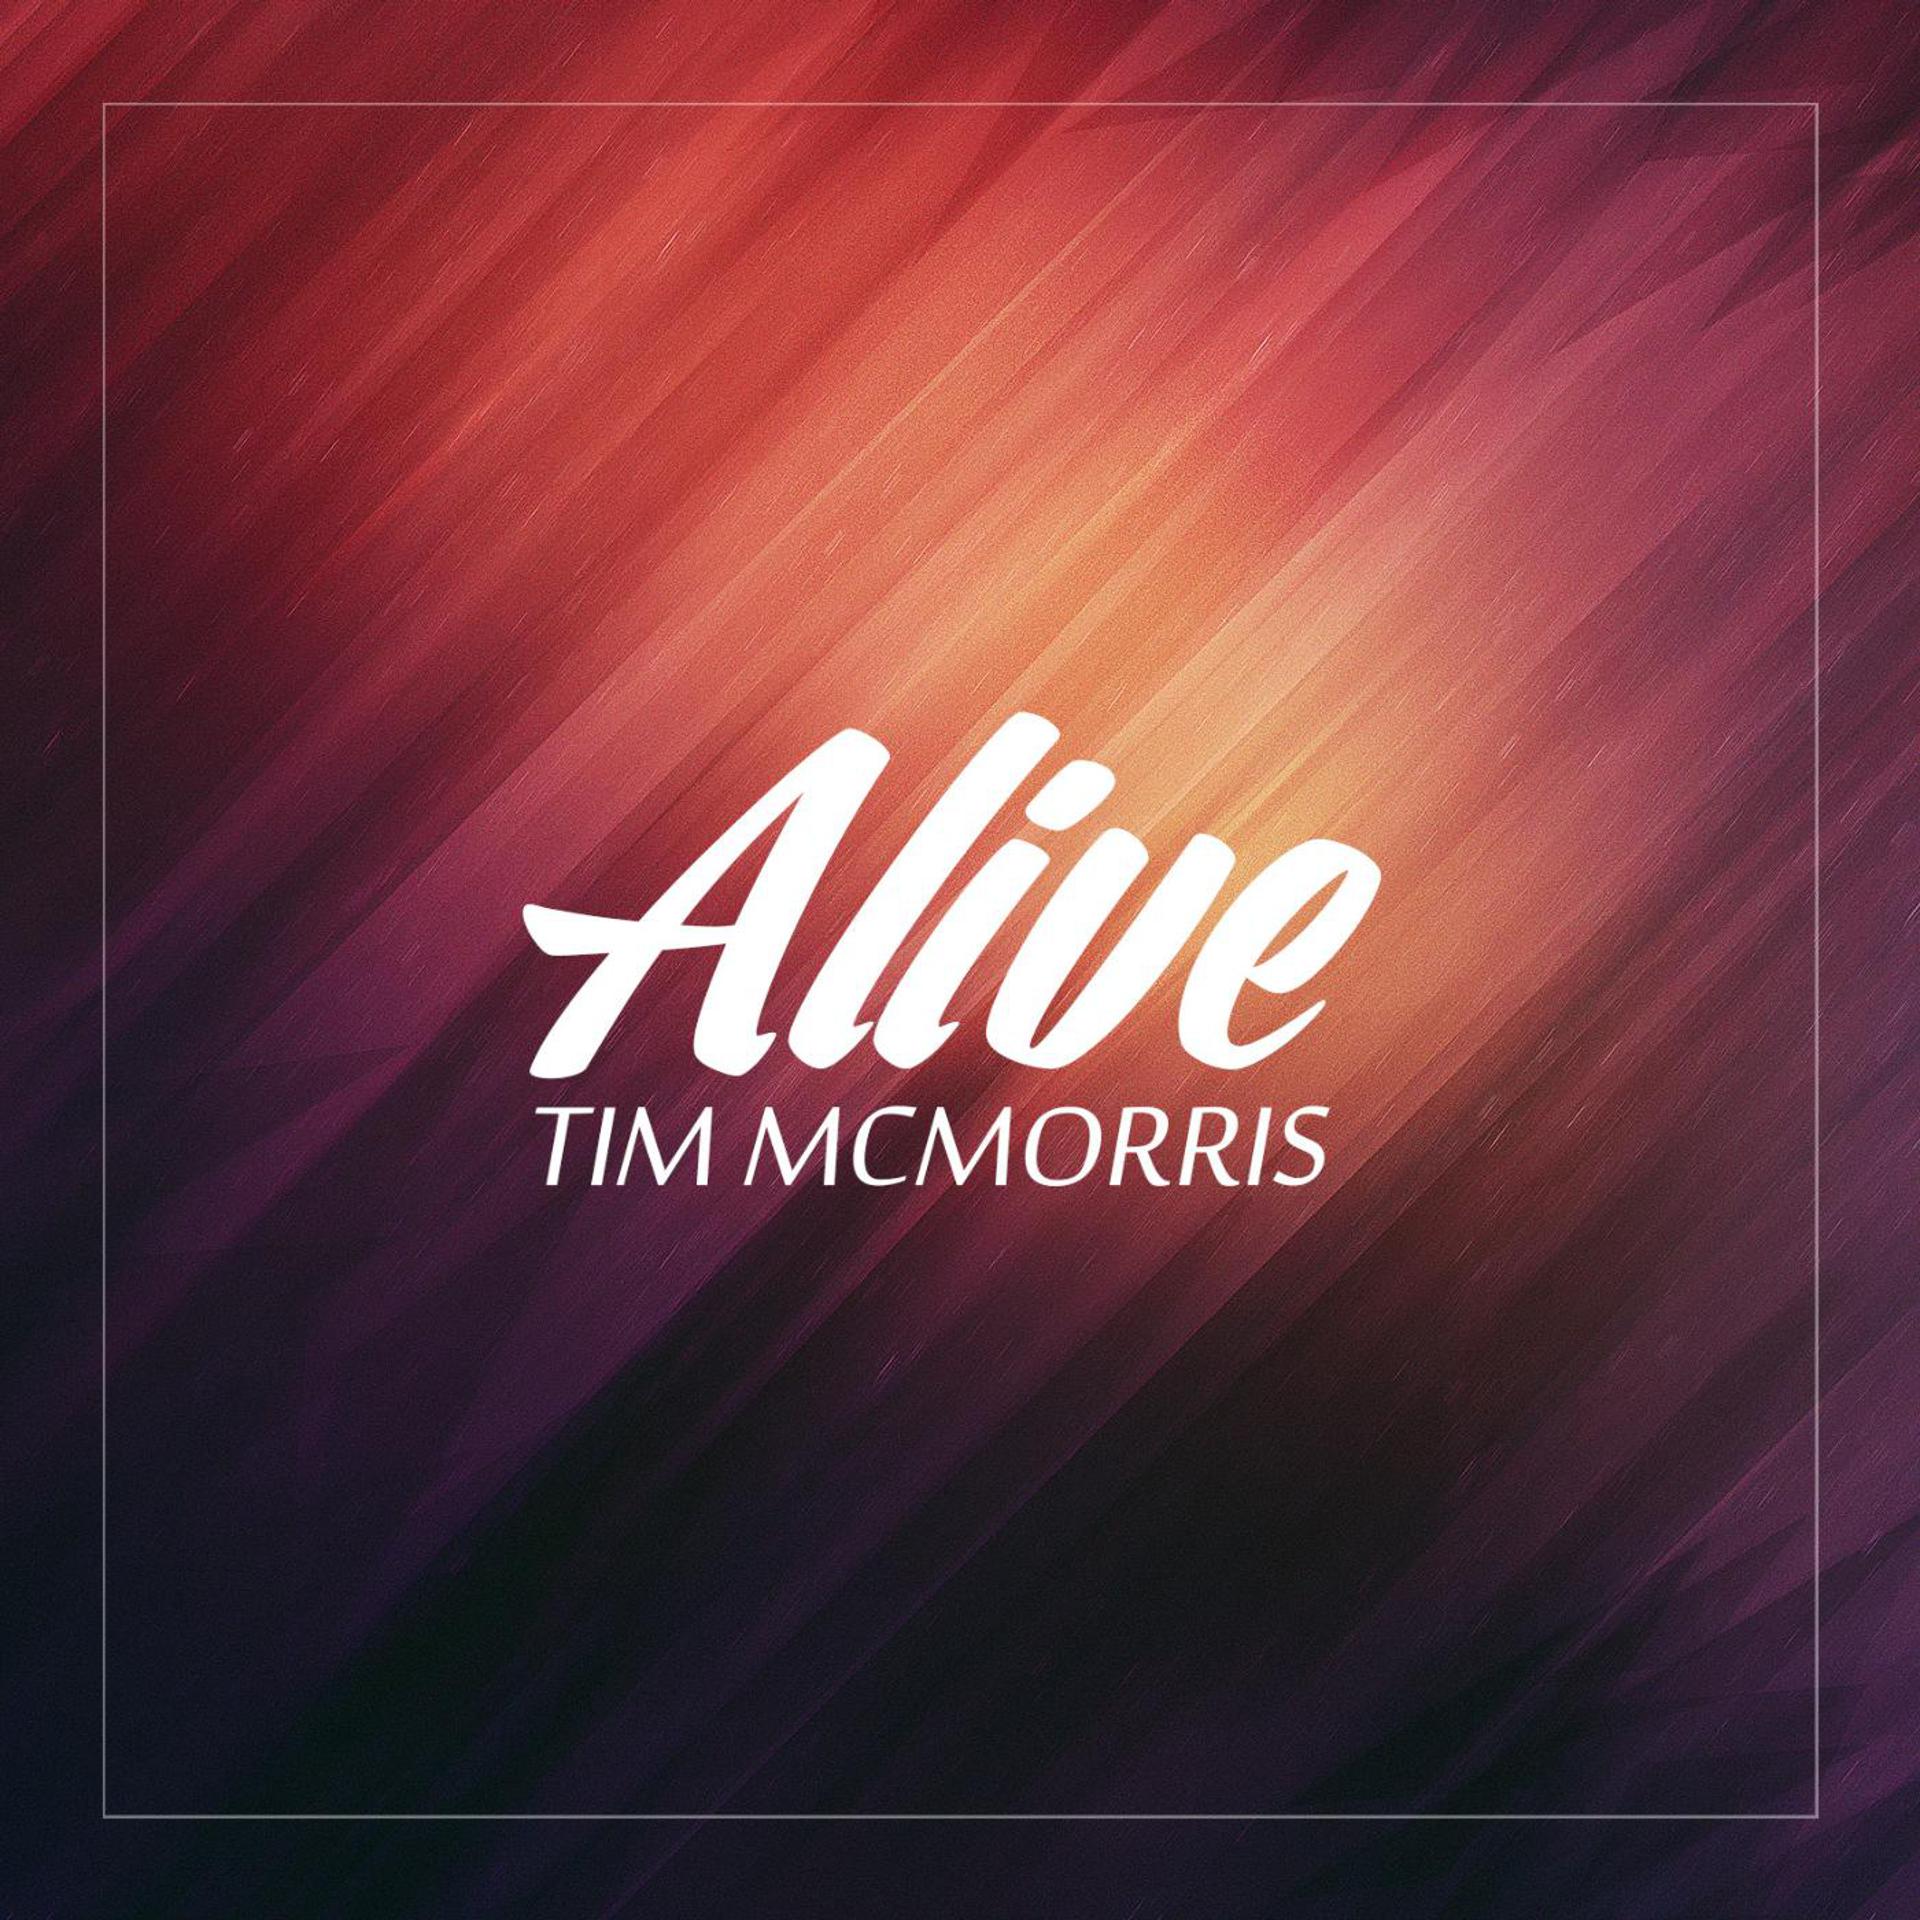 We re beautiful. Tim MCMORRIS, альбом Alive альбом. Tim MCMORRIS tim MCMORRIS. Tim MCMORRIS Alive. Тим Макморрис бьютифул Дэй.